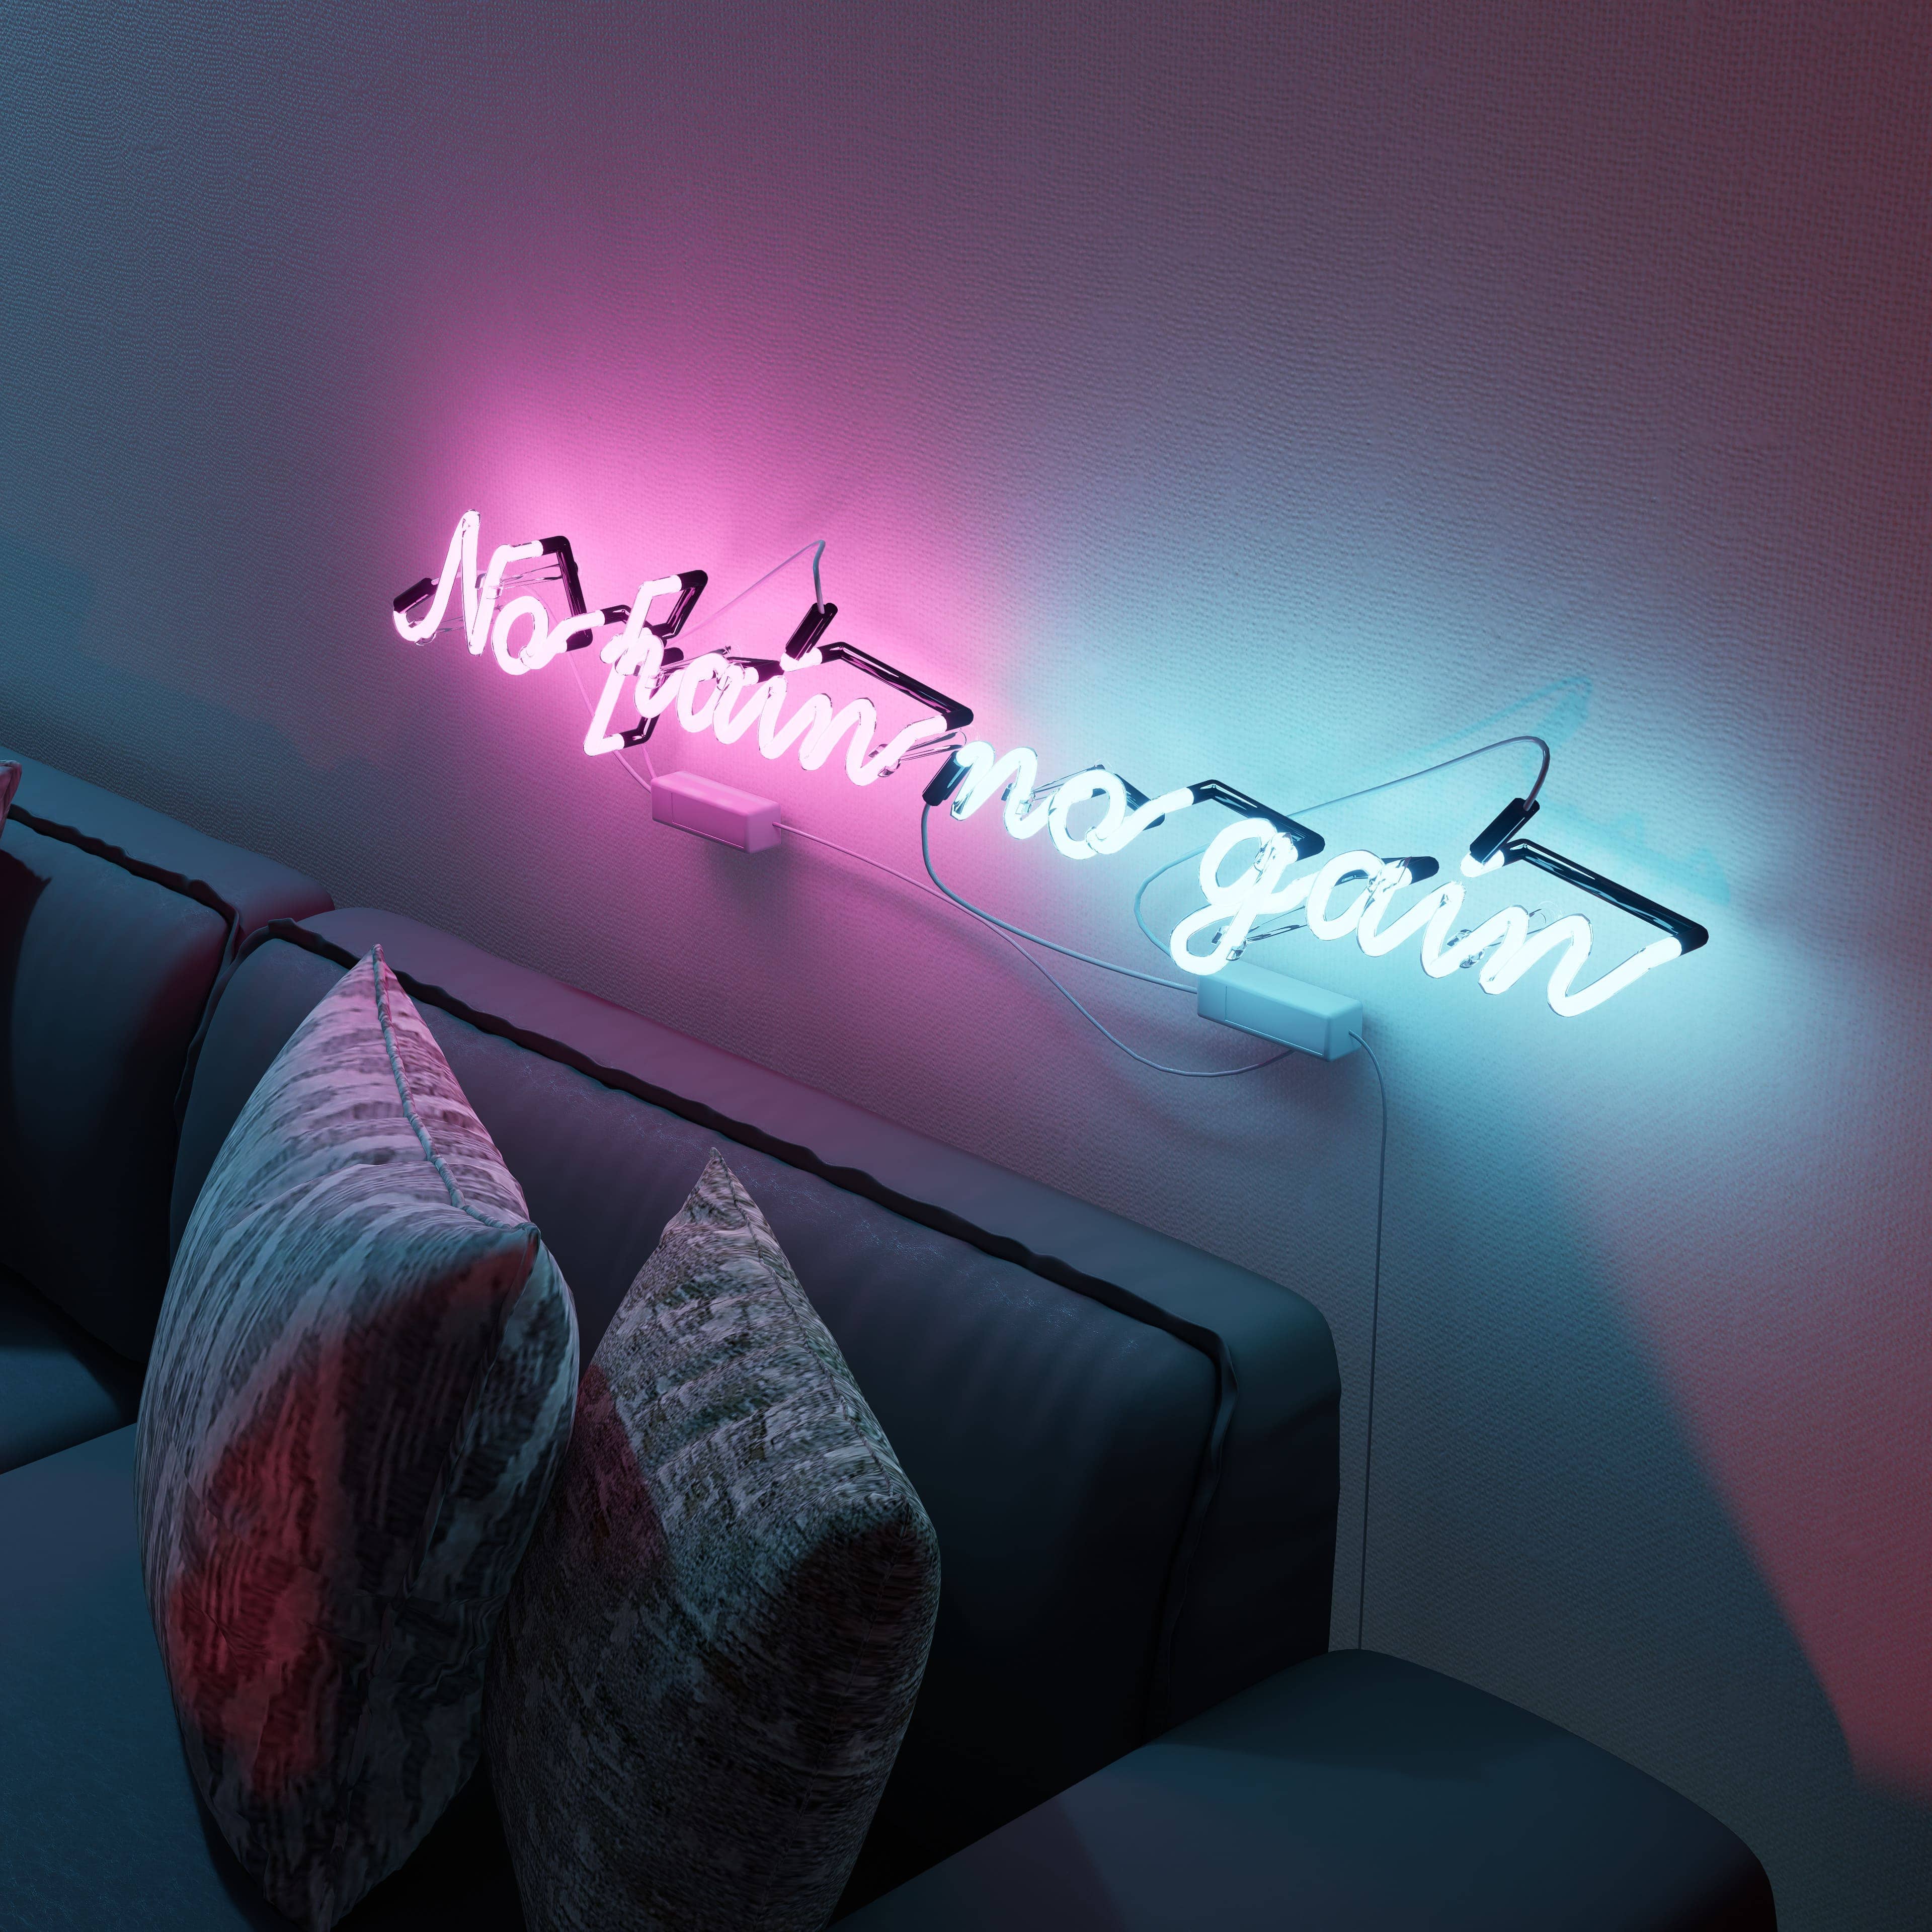 Retro neon sign featuring No pain no gain perfect for unique interiors